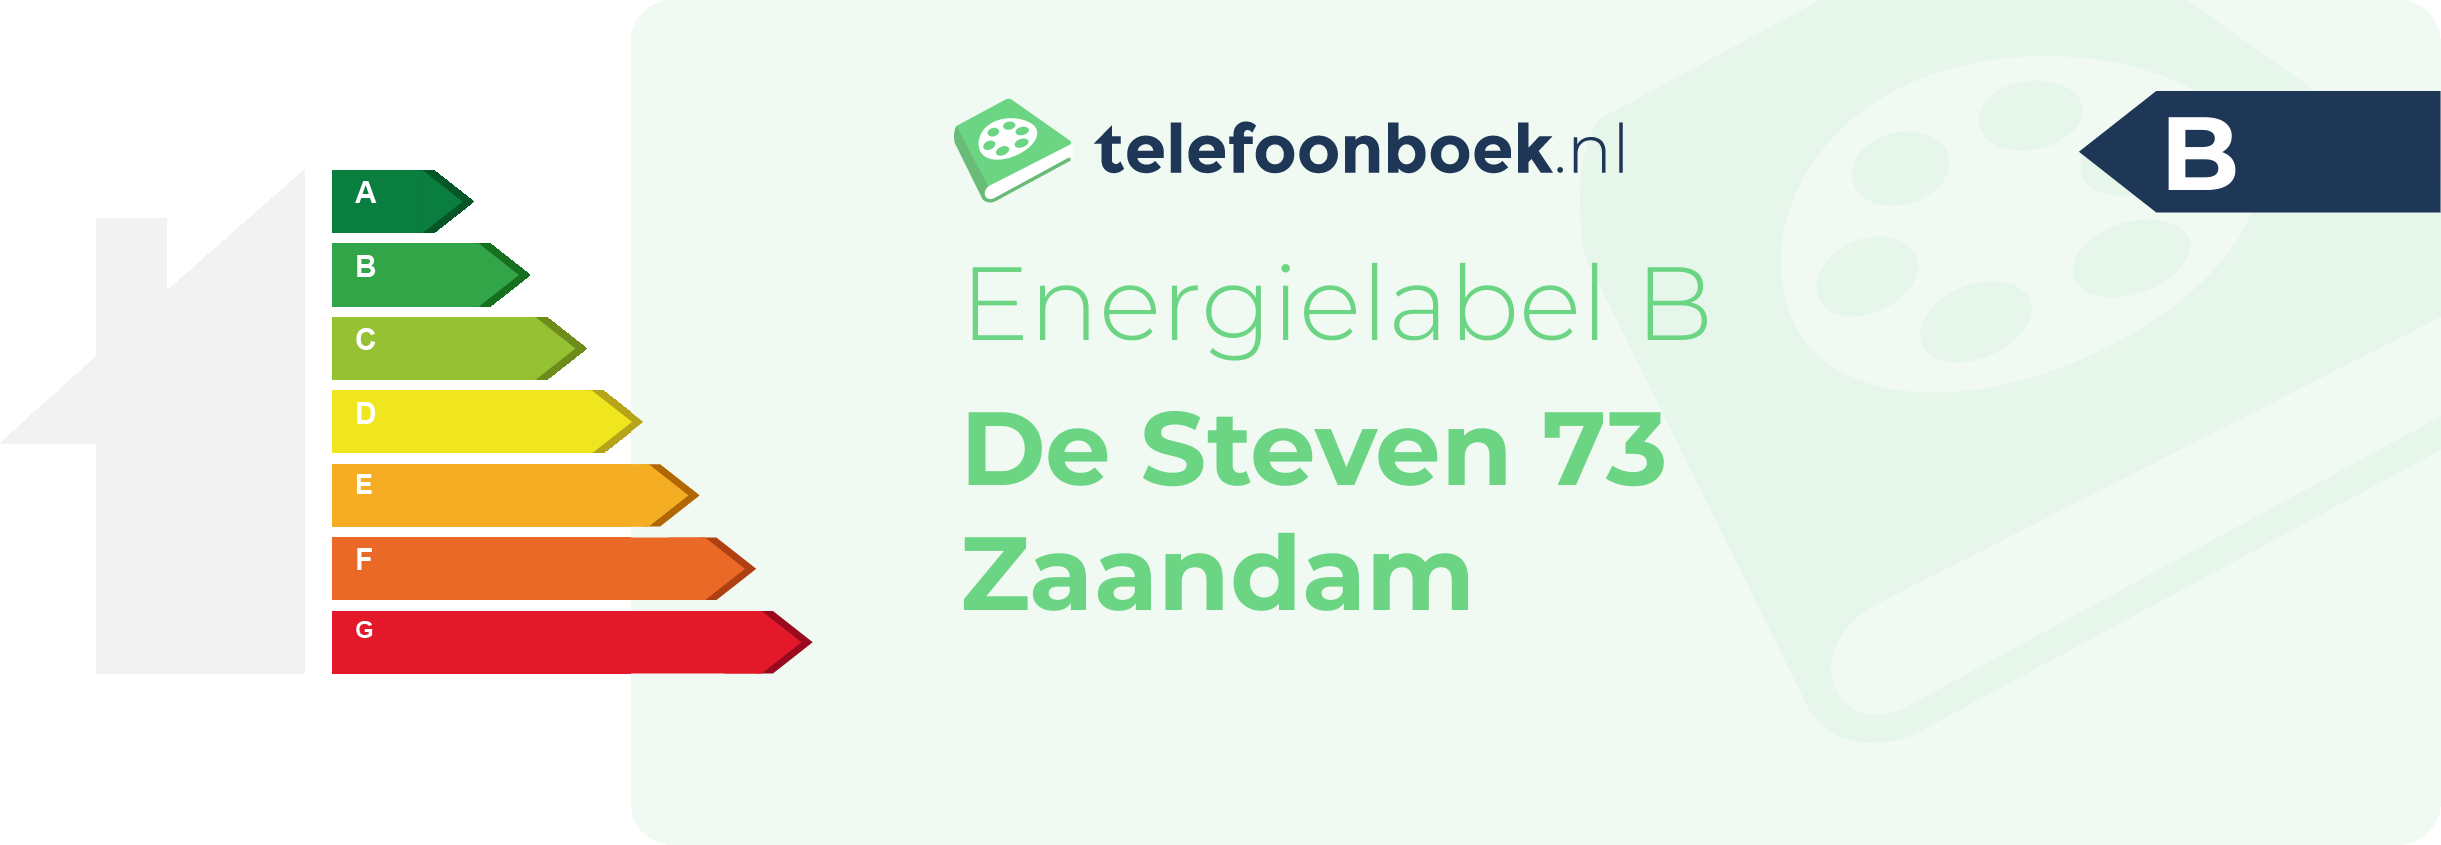 Energielabel De Steven 73 Zaandam